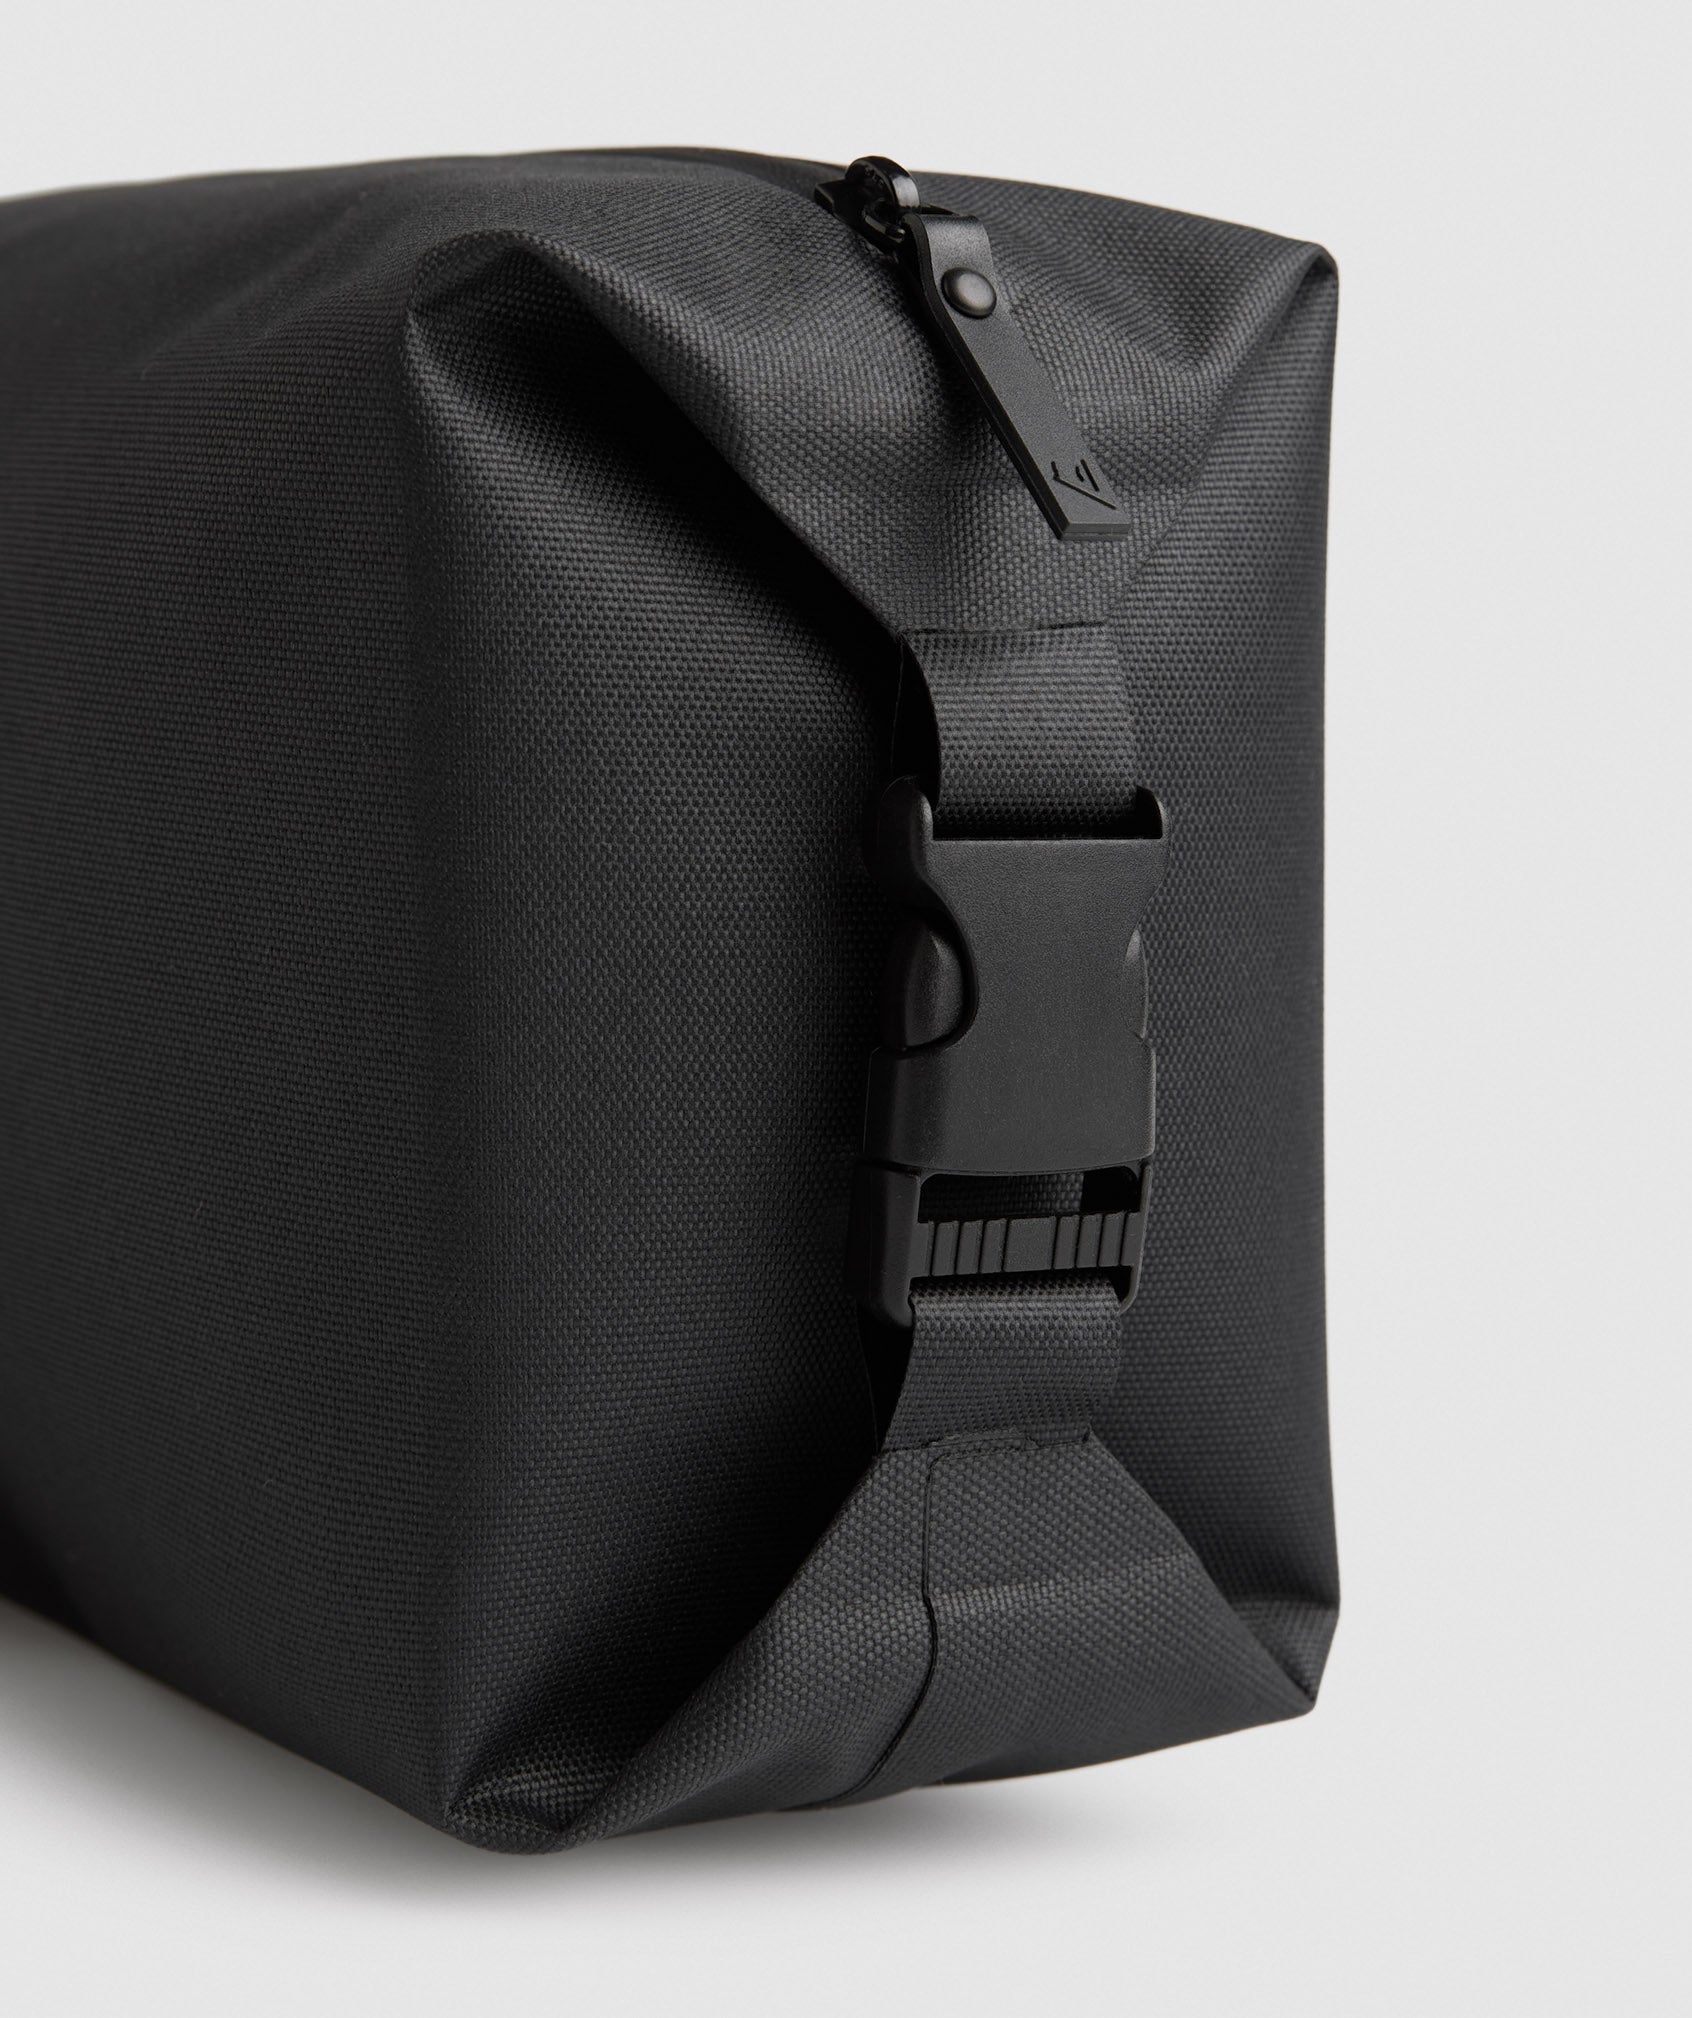 X-Series Wash Bag in Black - view 2